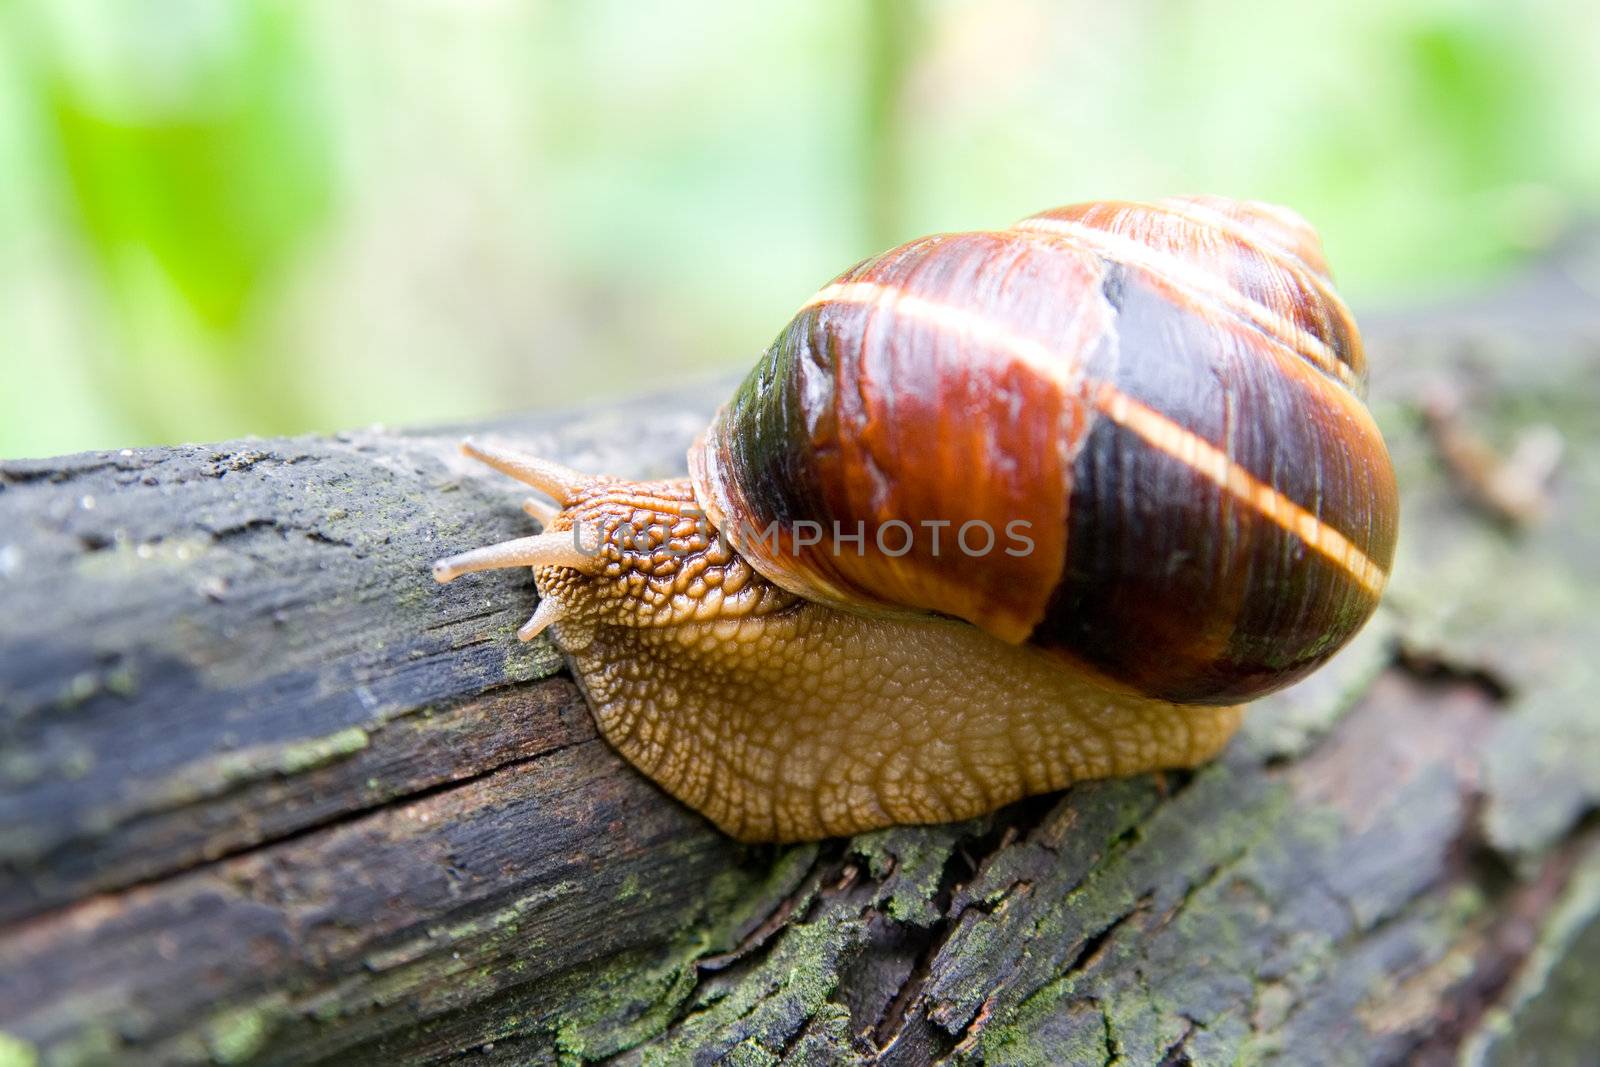 Snail in a Summer Garden 2 by Sergius